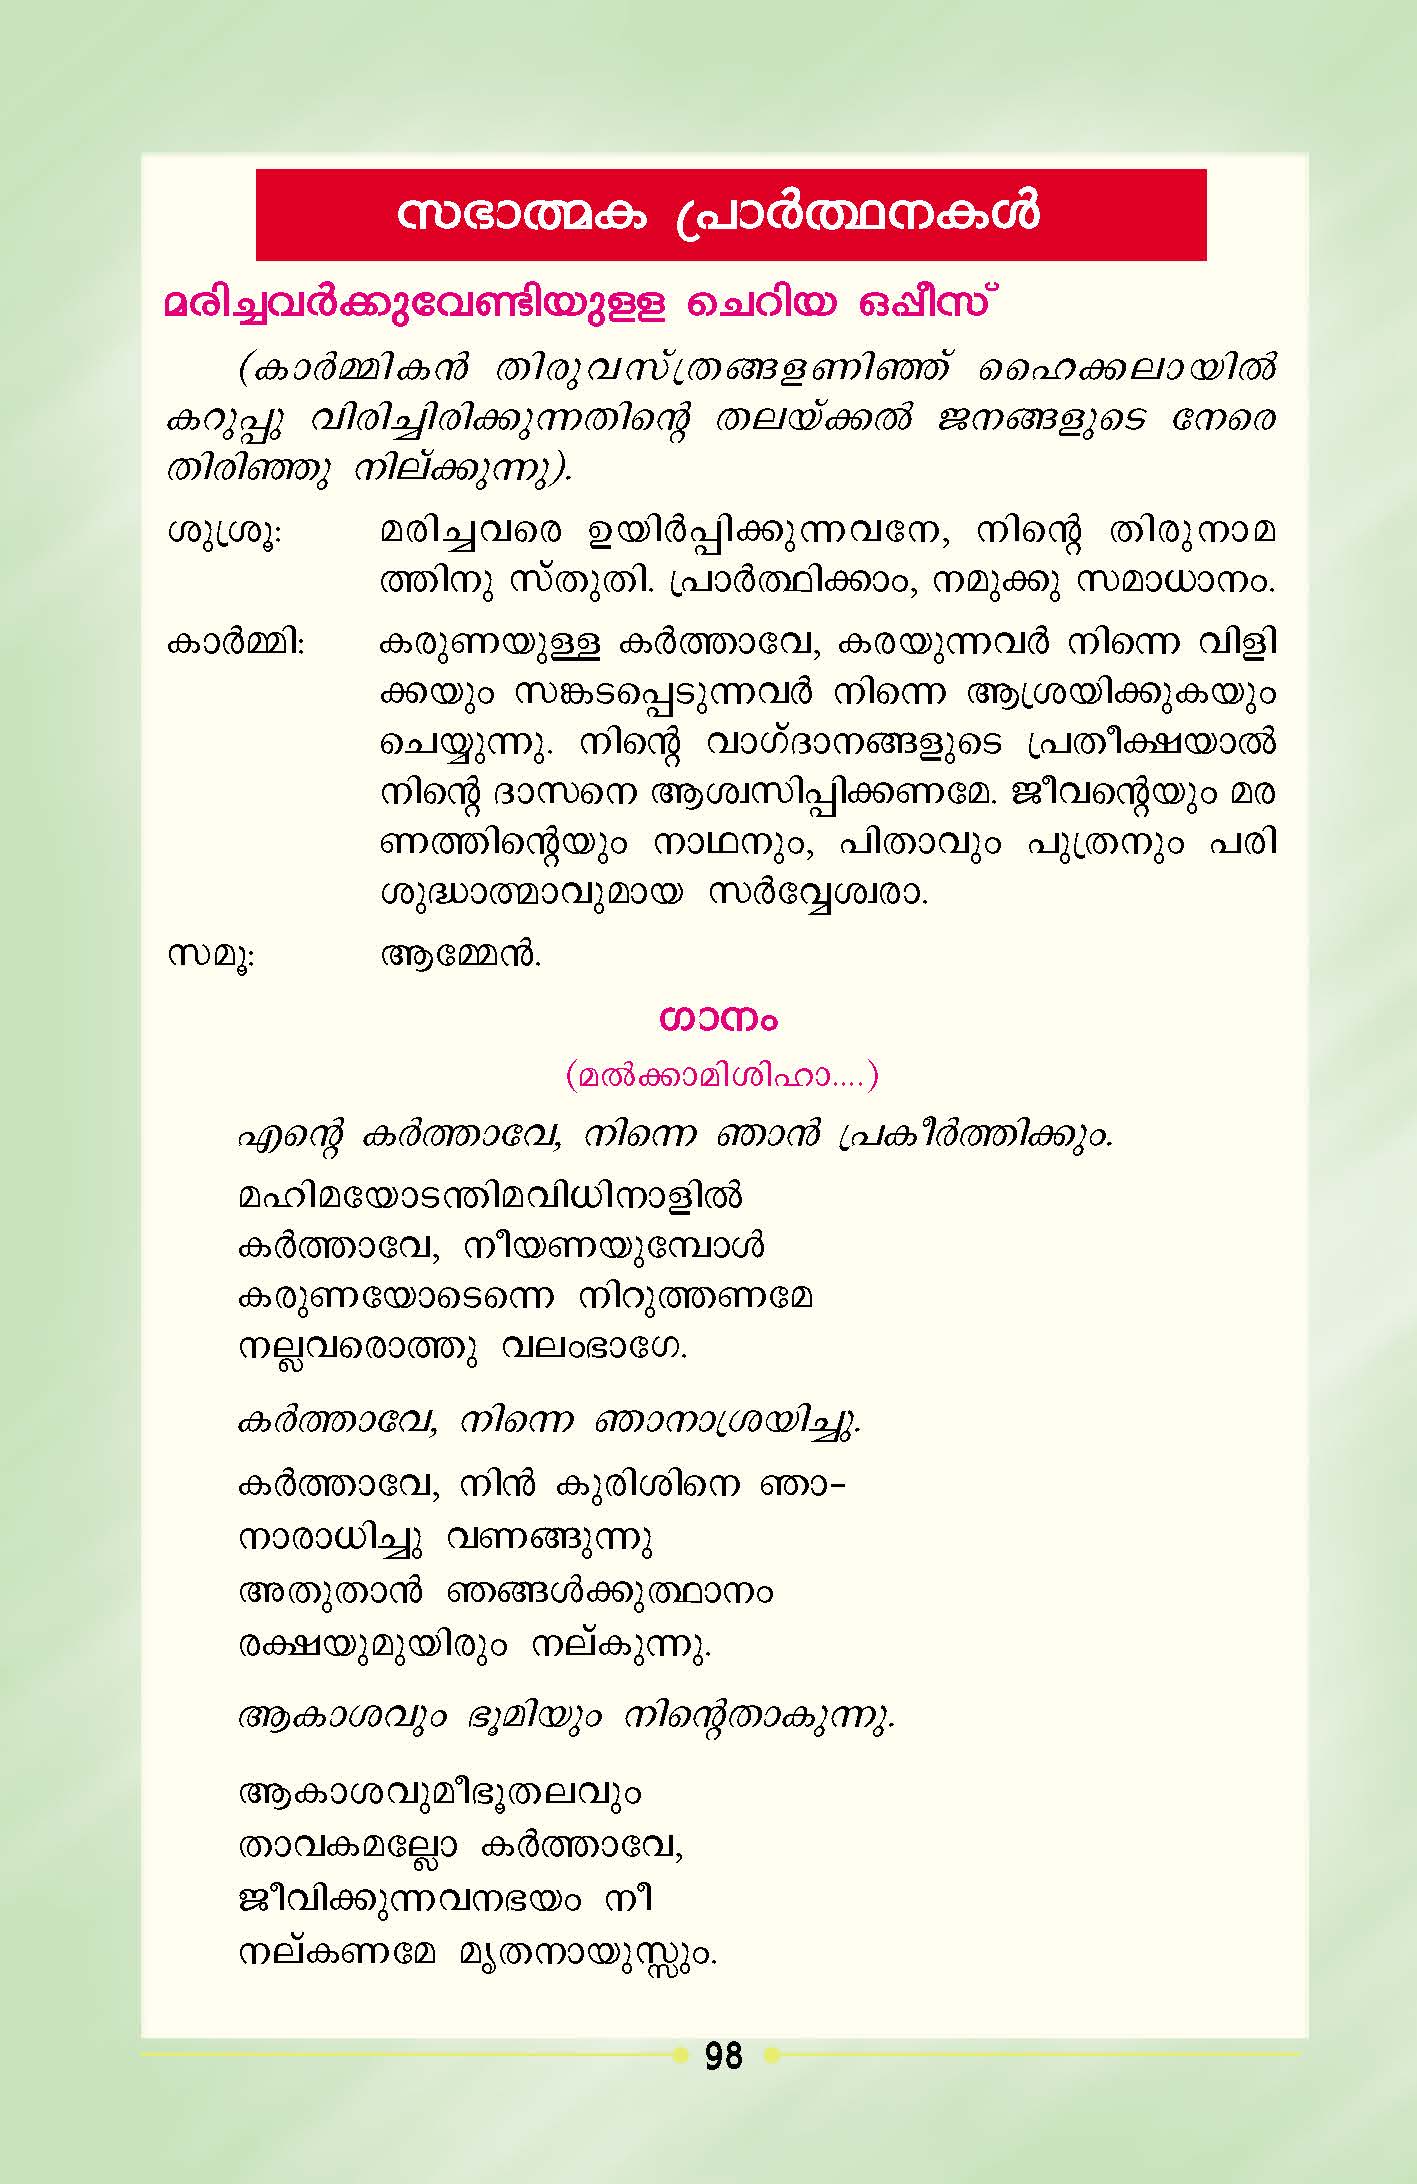 Cheriya Oppesu Office for the Dead (Malayalam) 01